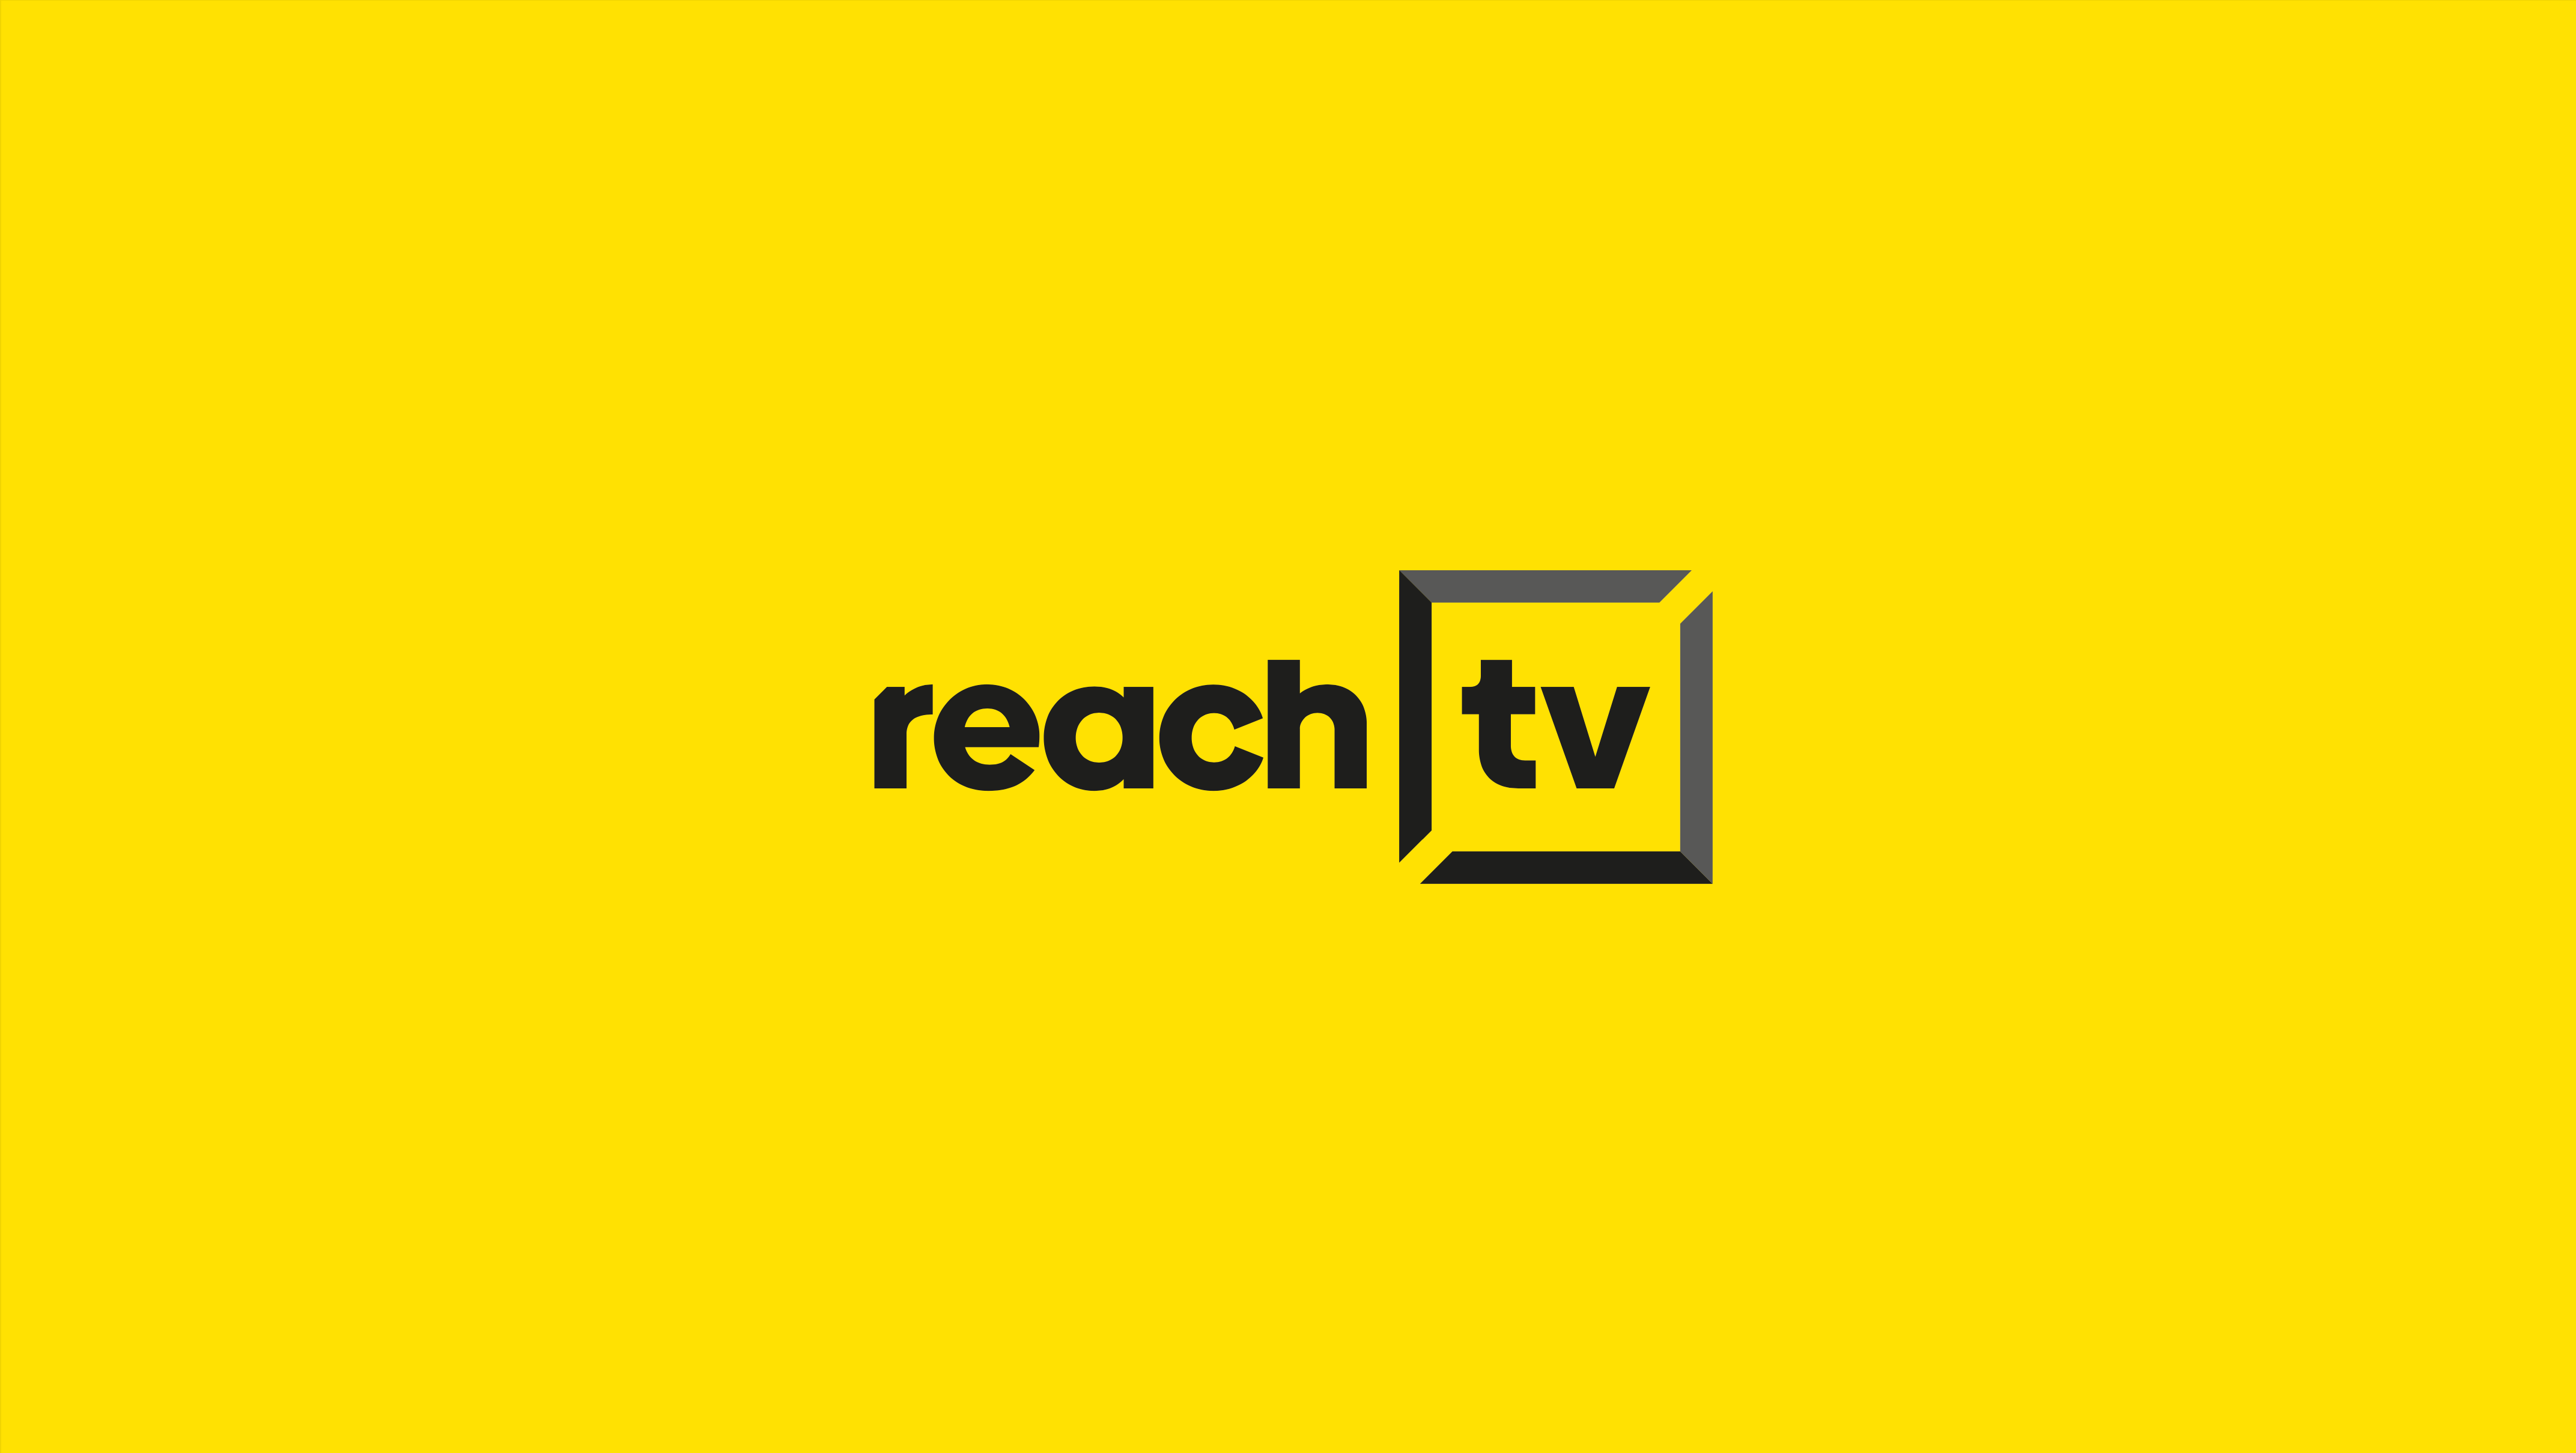 ReachTV